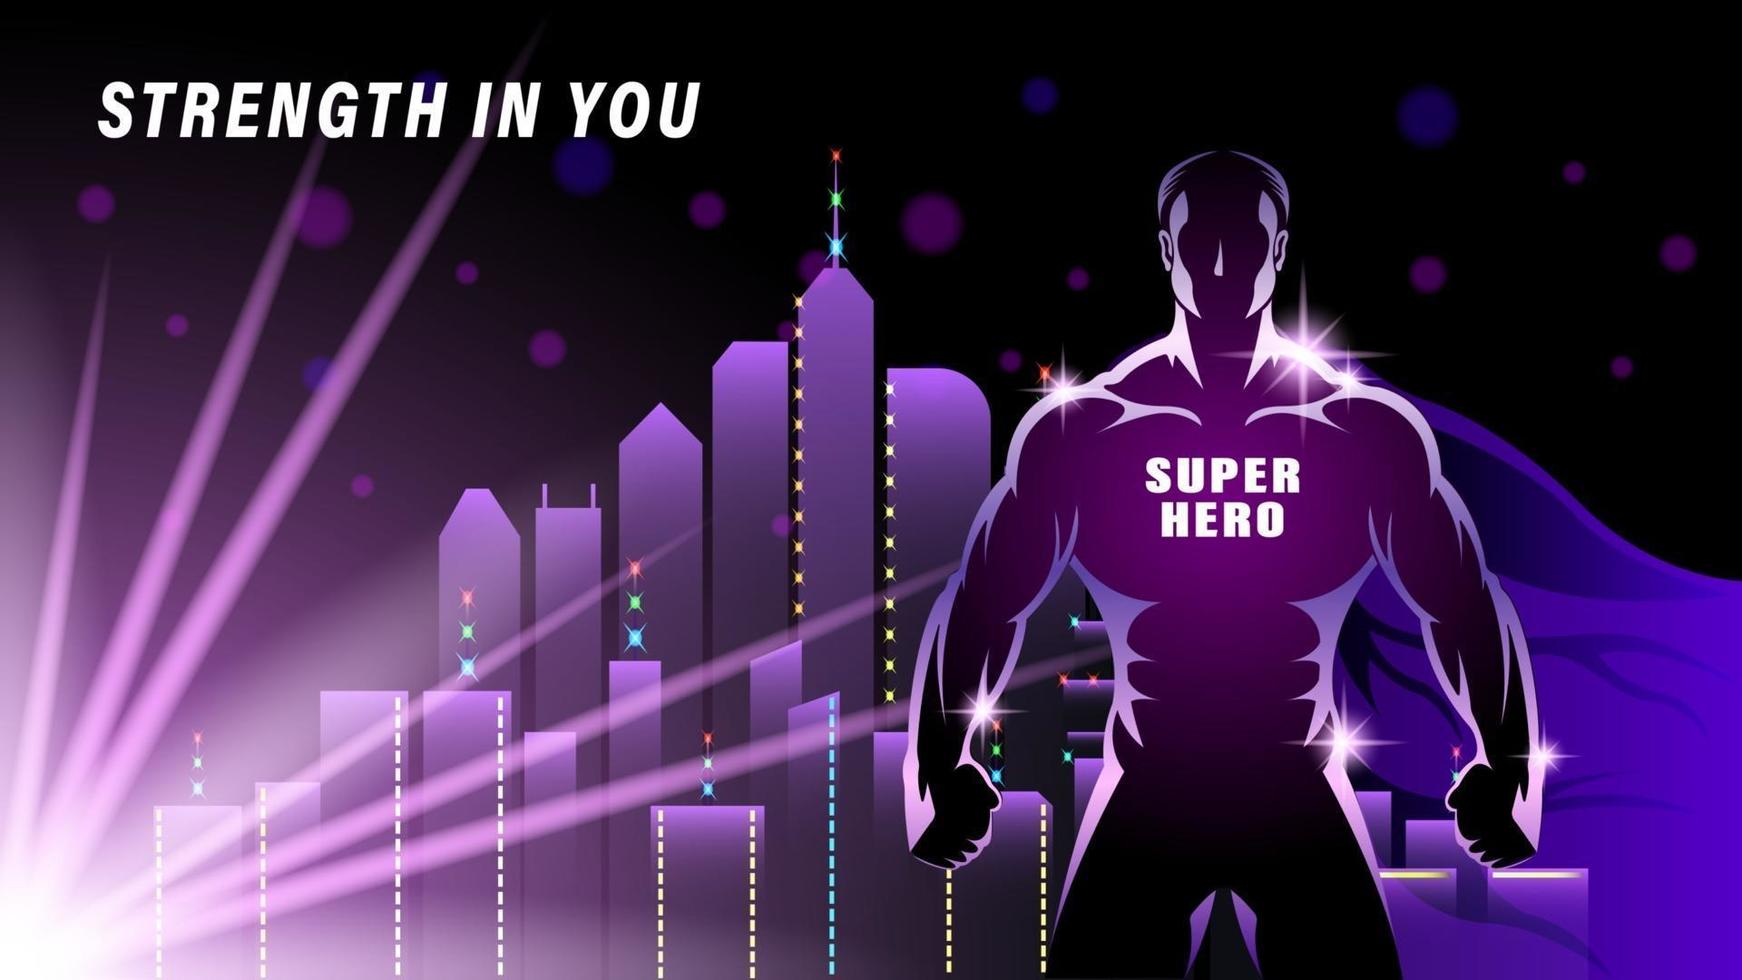 Super Hero man silhouette cartoon style vector